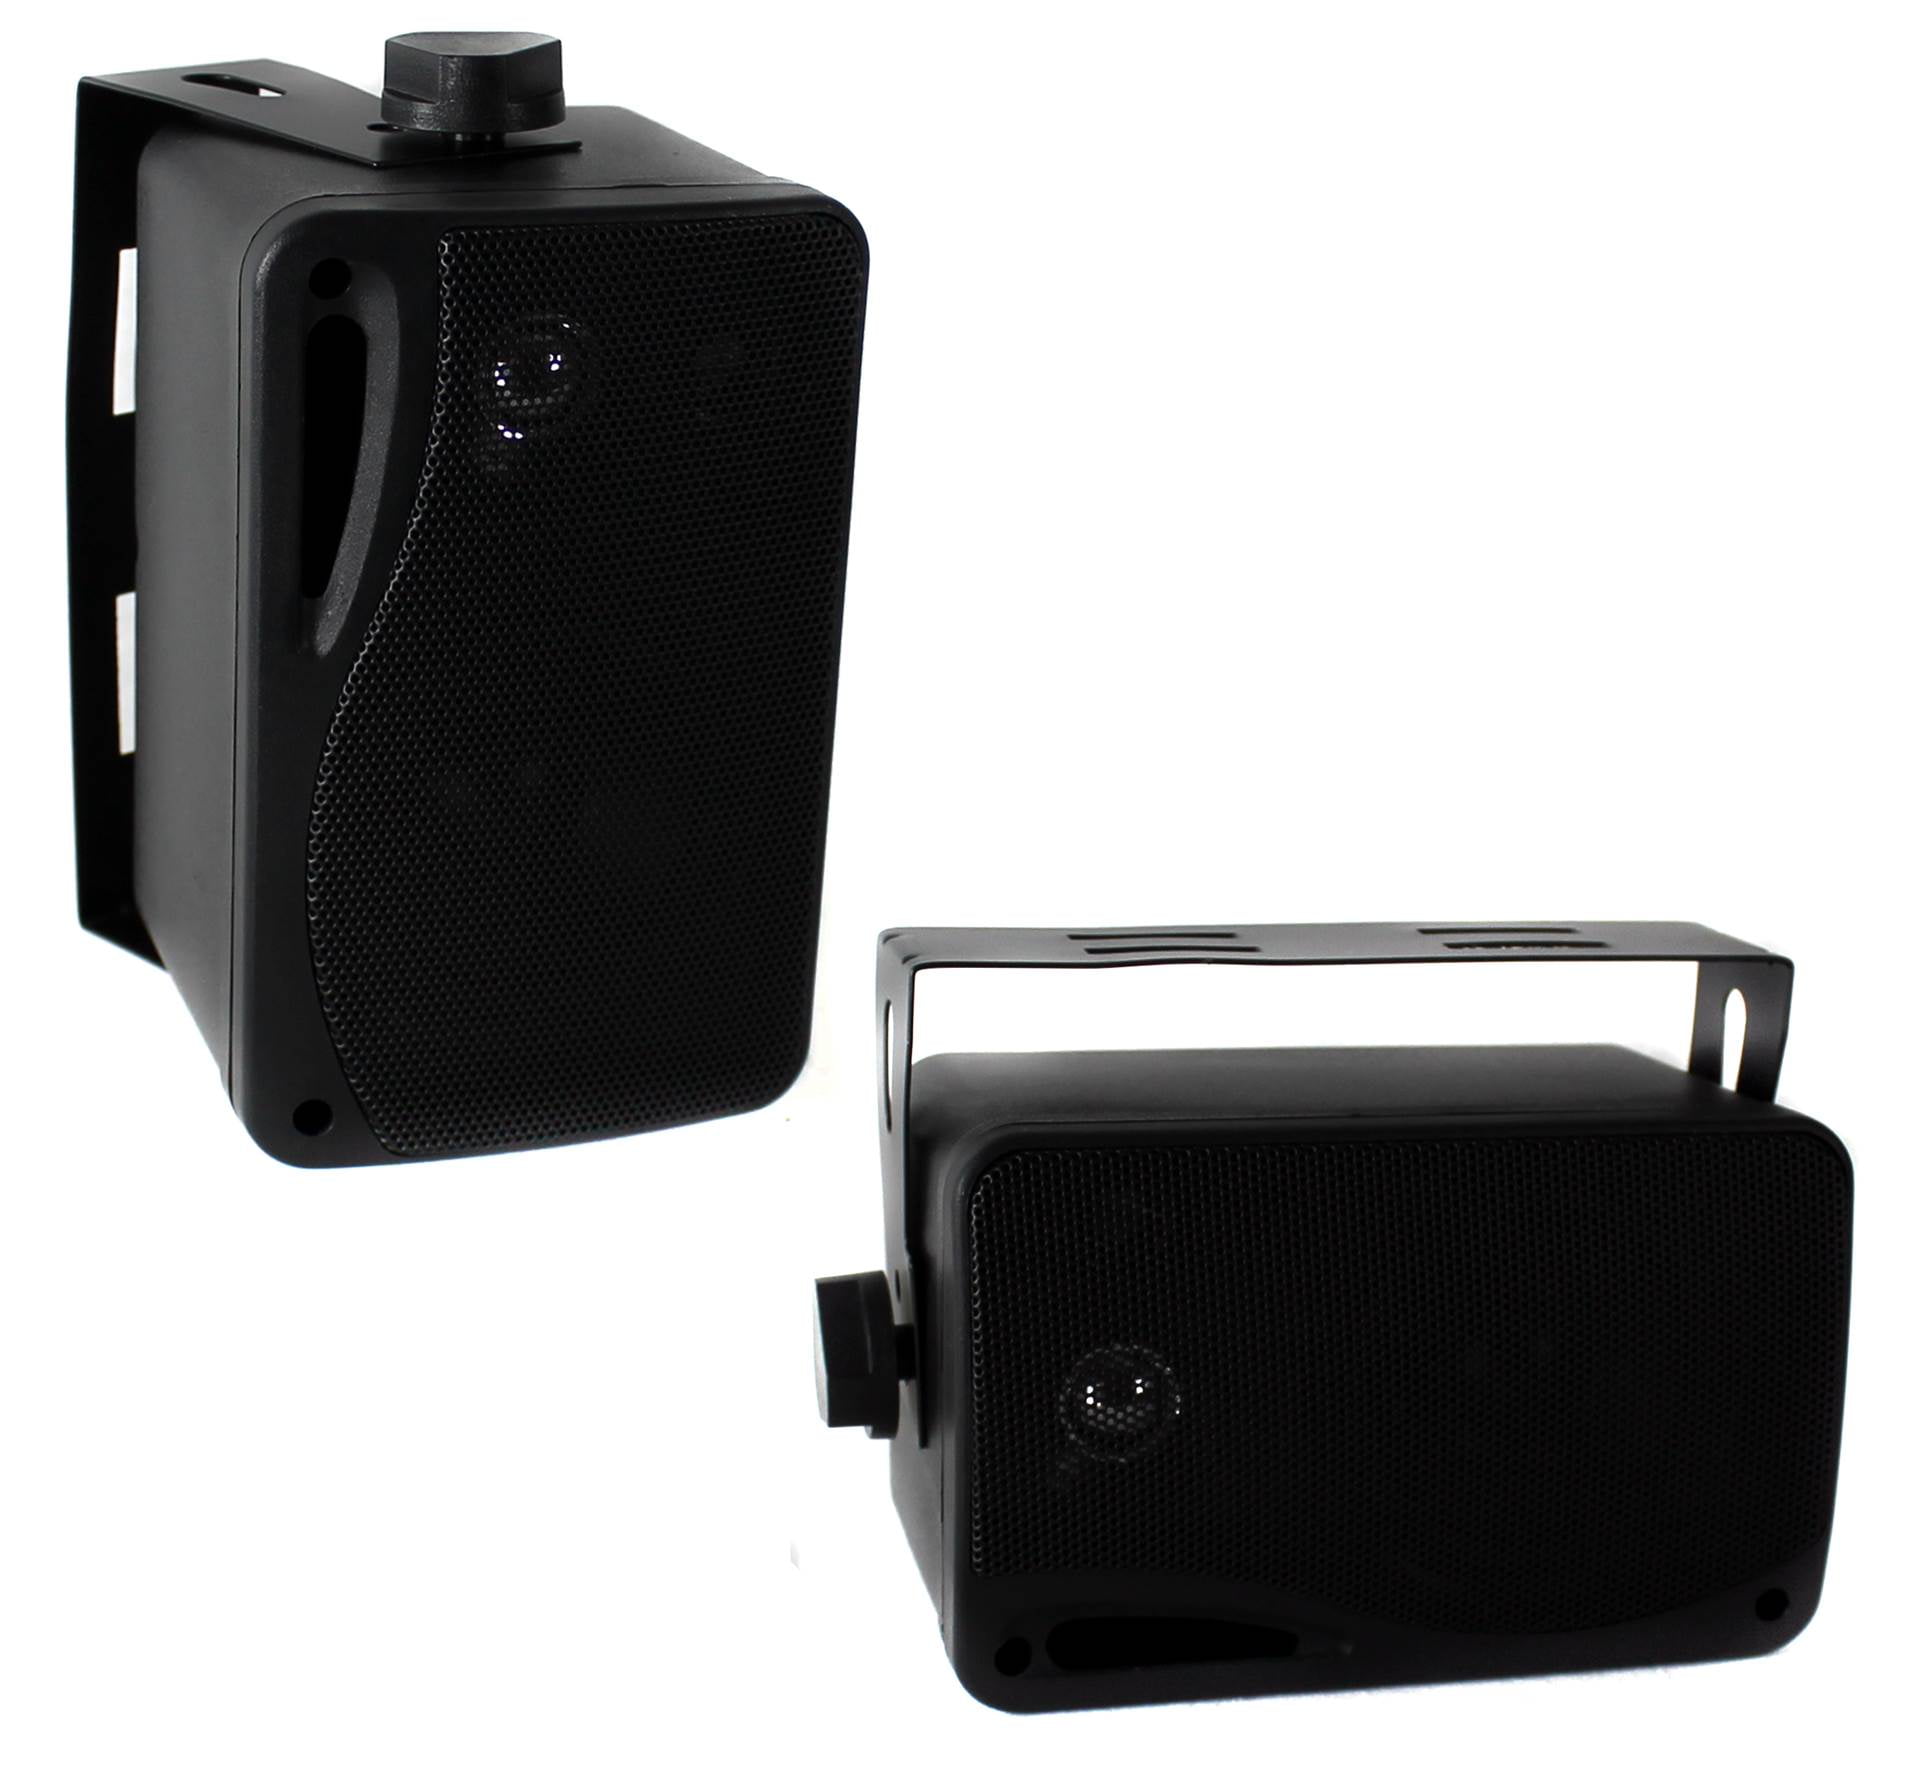 NEW Pyle PLMR24S 3.5" 200W 3-Way WeatherProof Mini Box Speakers Silver Lot of 4 